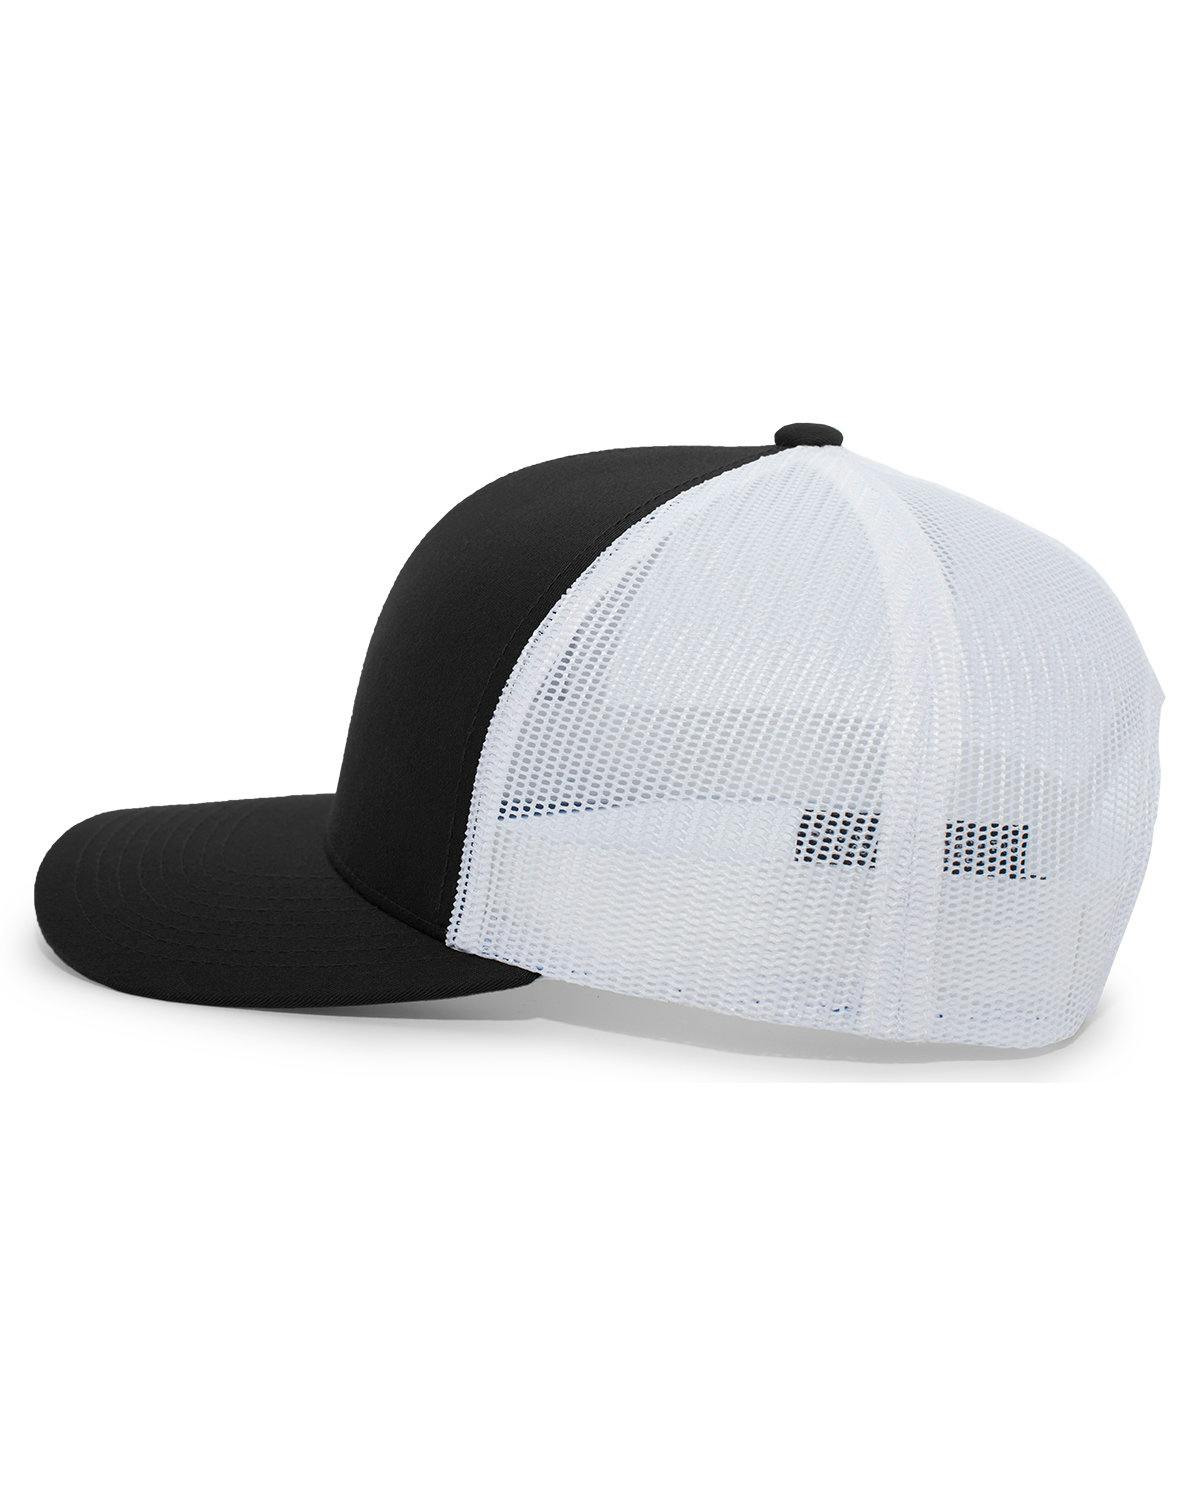 Image for Trucker Snapback Hat